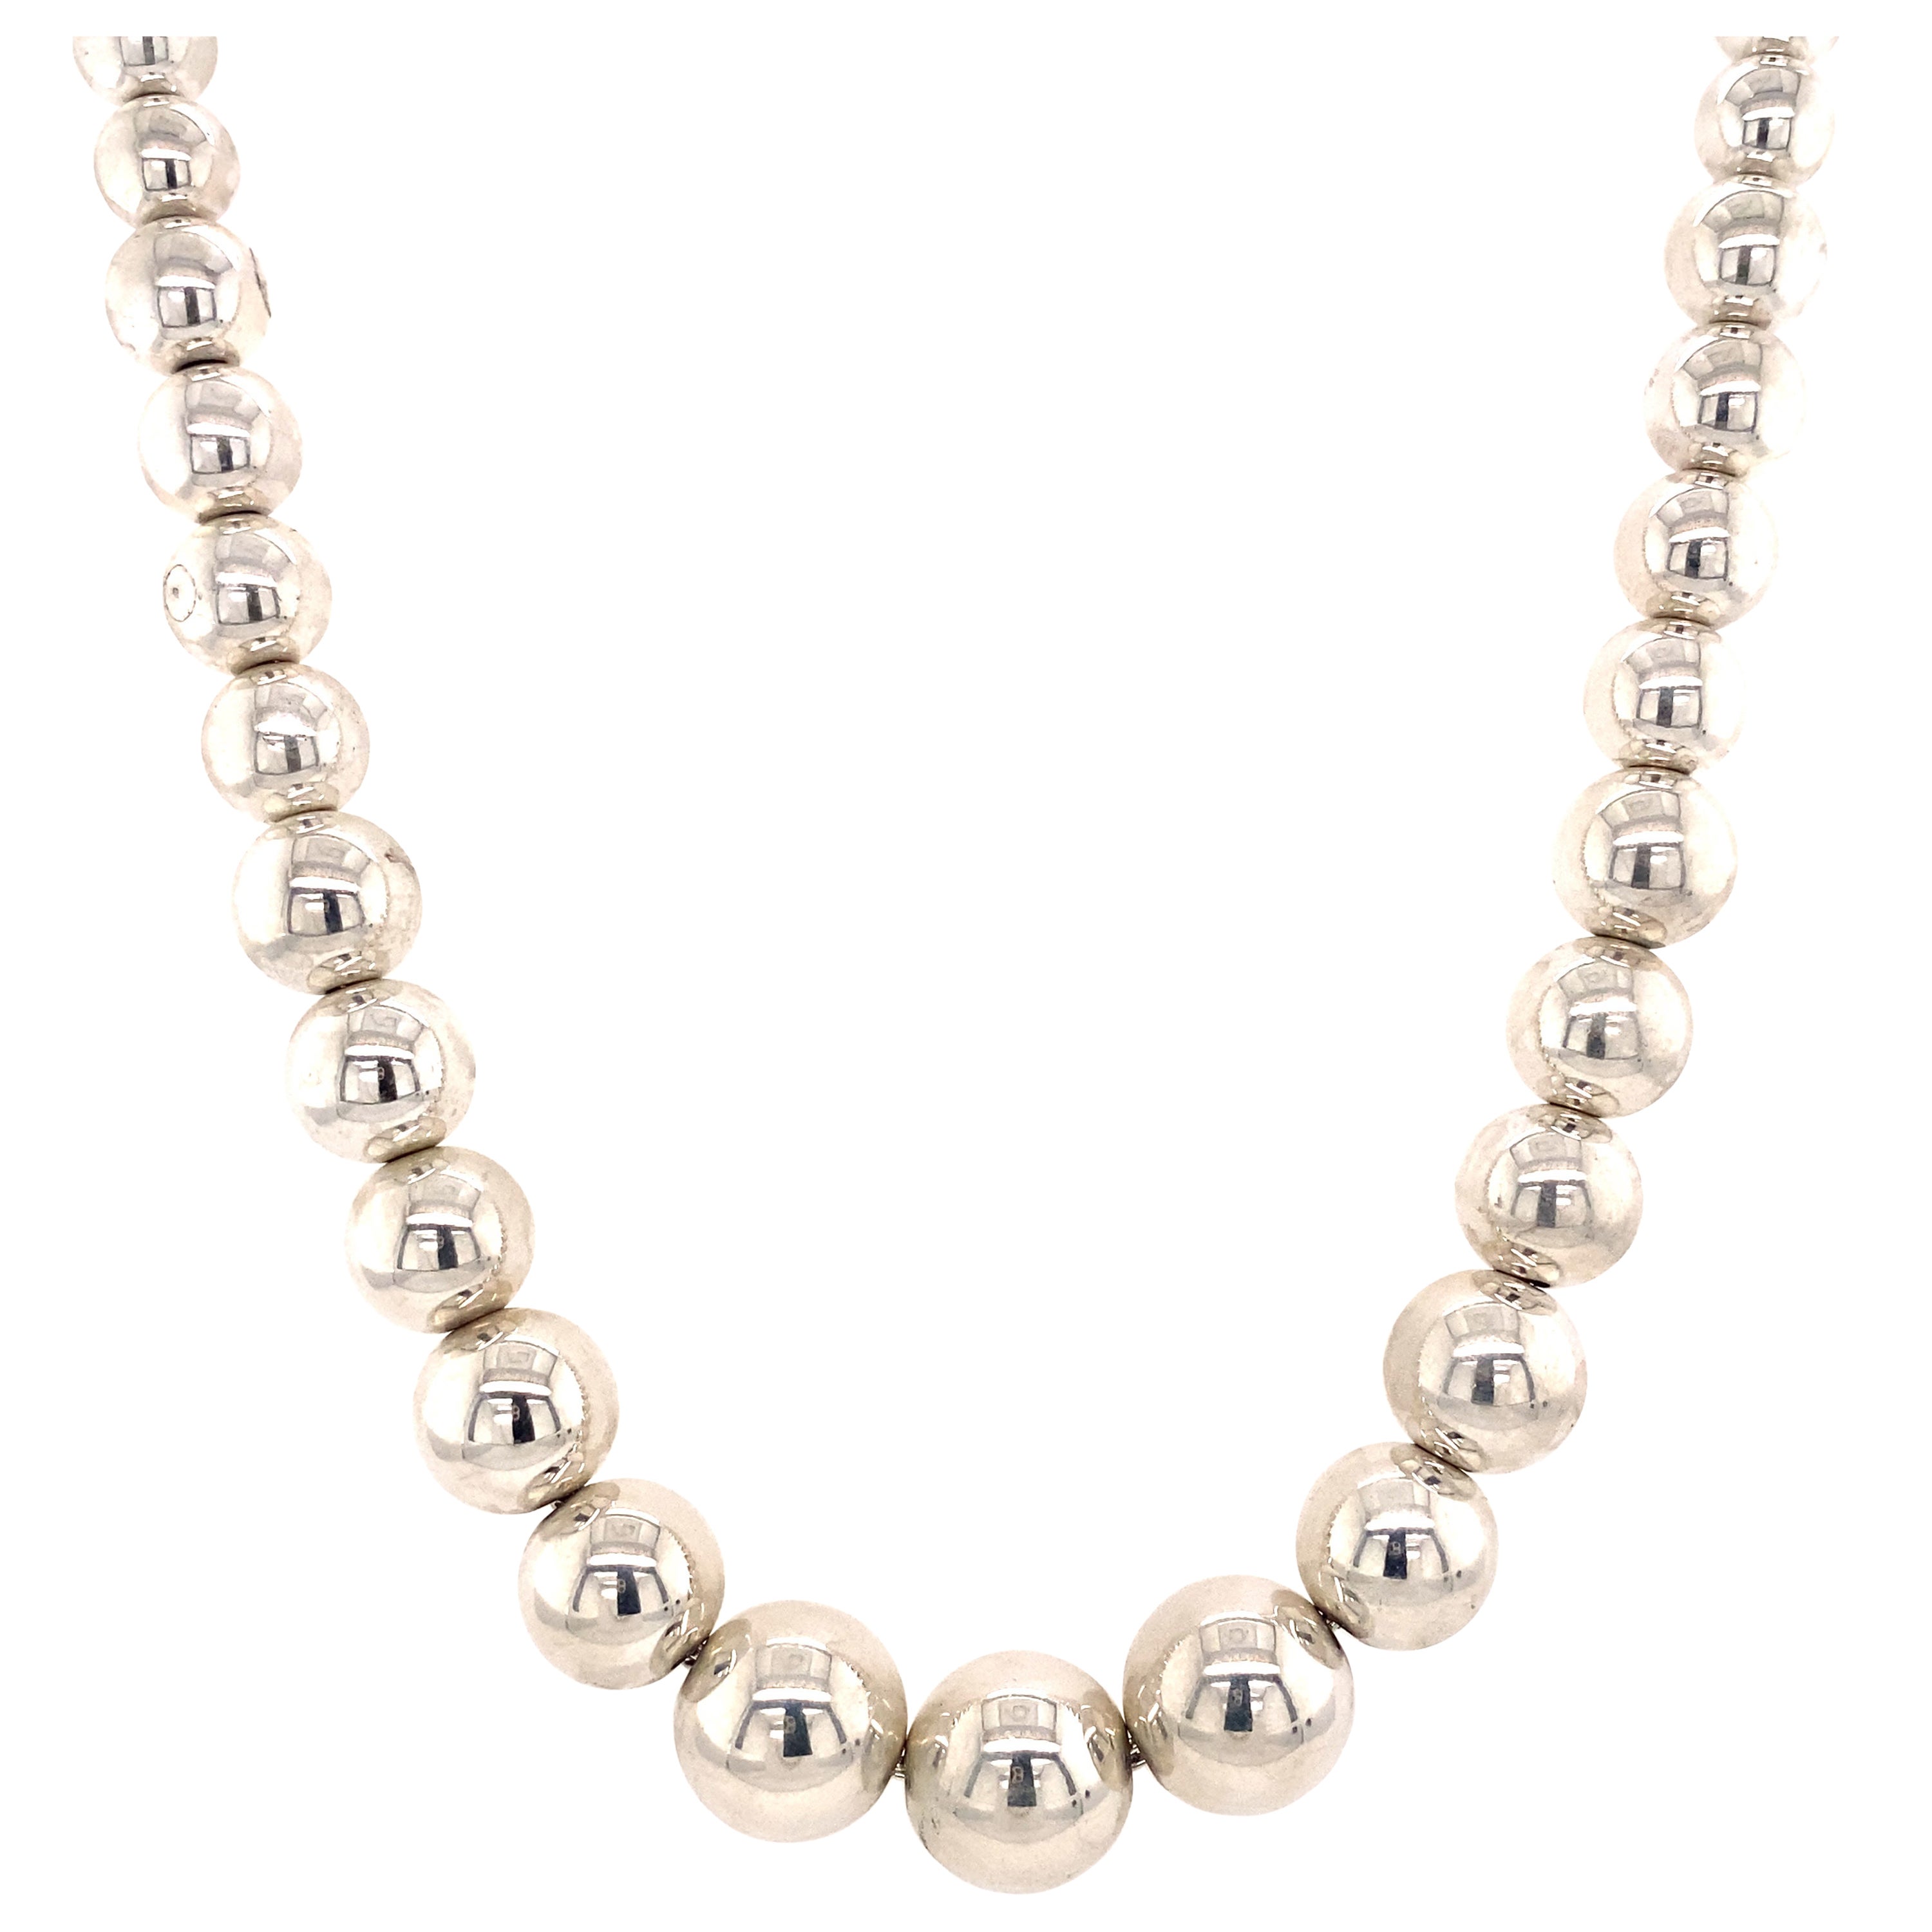 Tiffany & Co. Graduated Ball Necklace